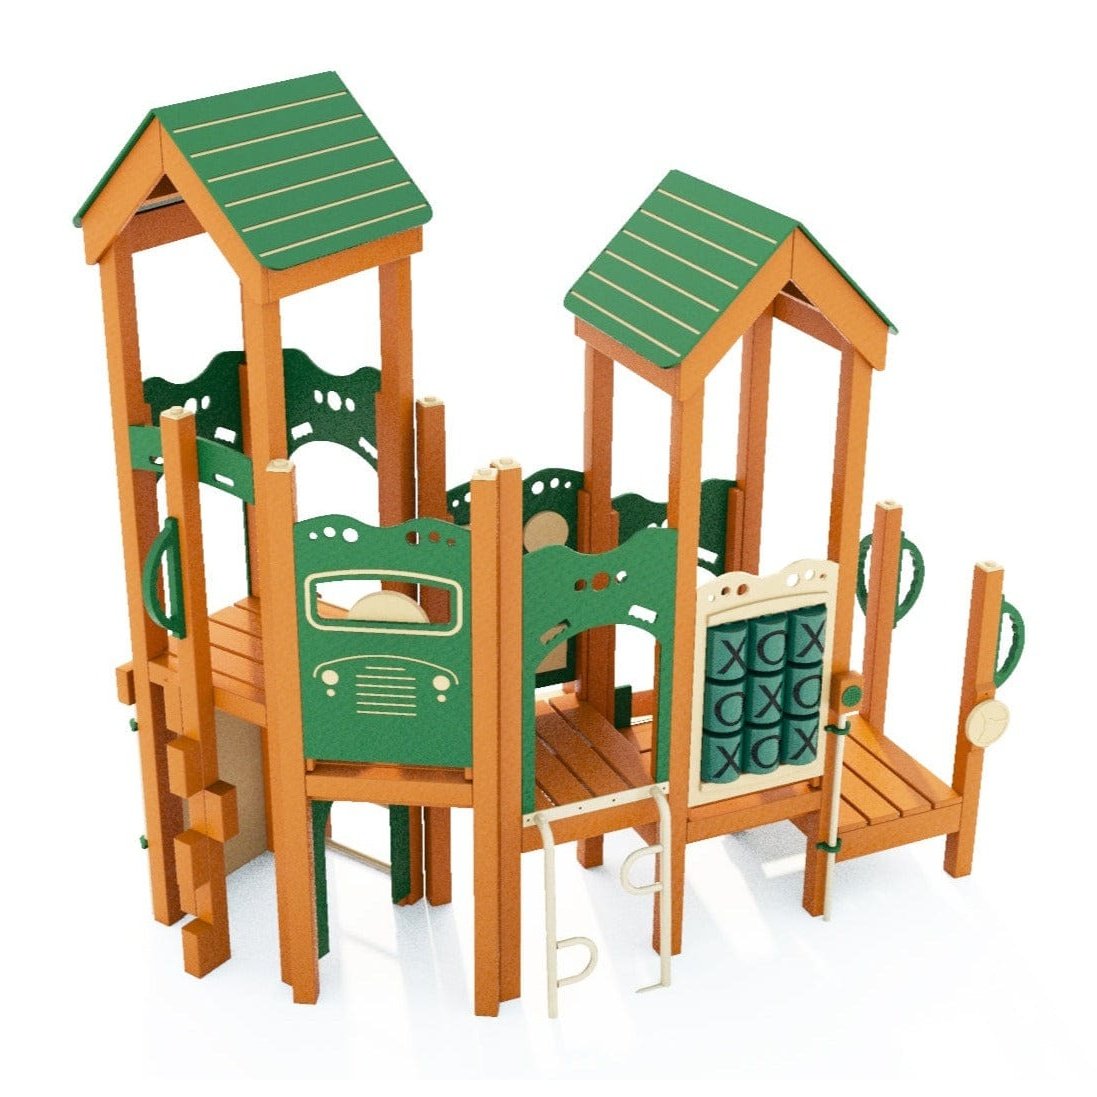 Meadow Playset - Preschool Playgrounds - Playtopia, Inc.